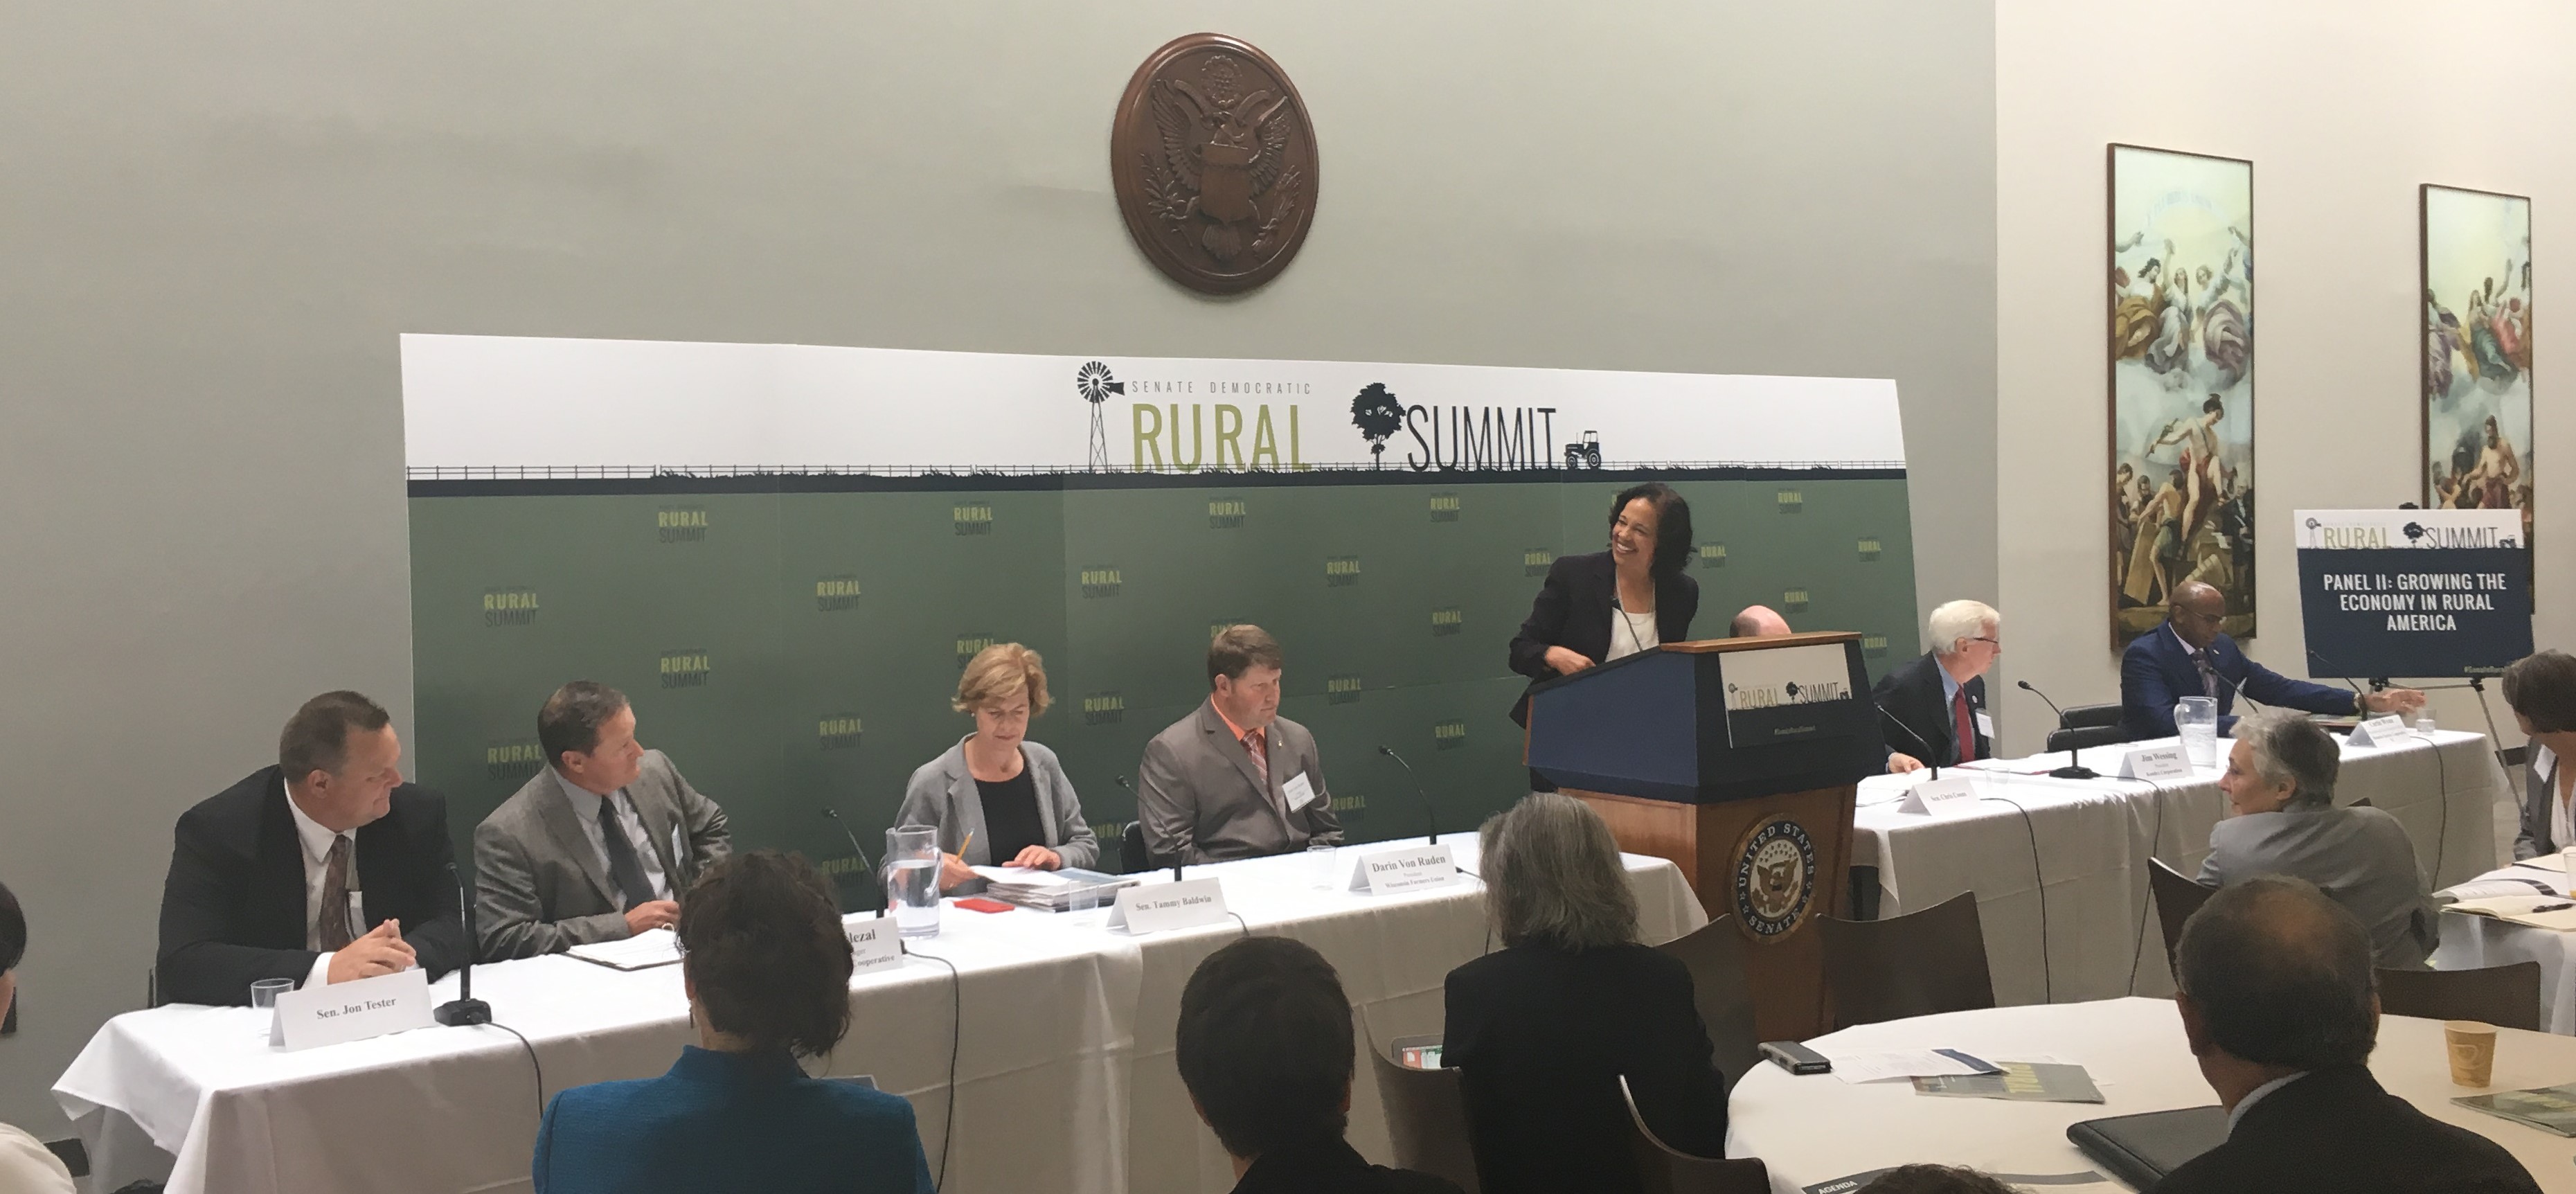 Photo of Senate Rural Summit